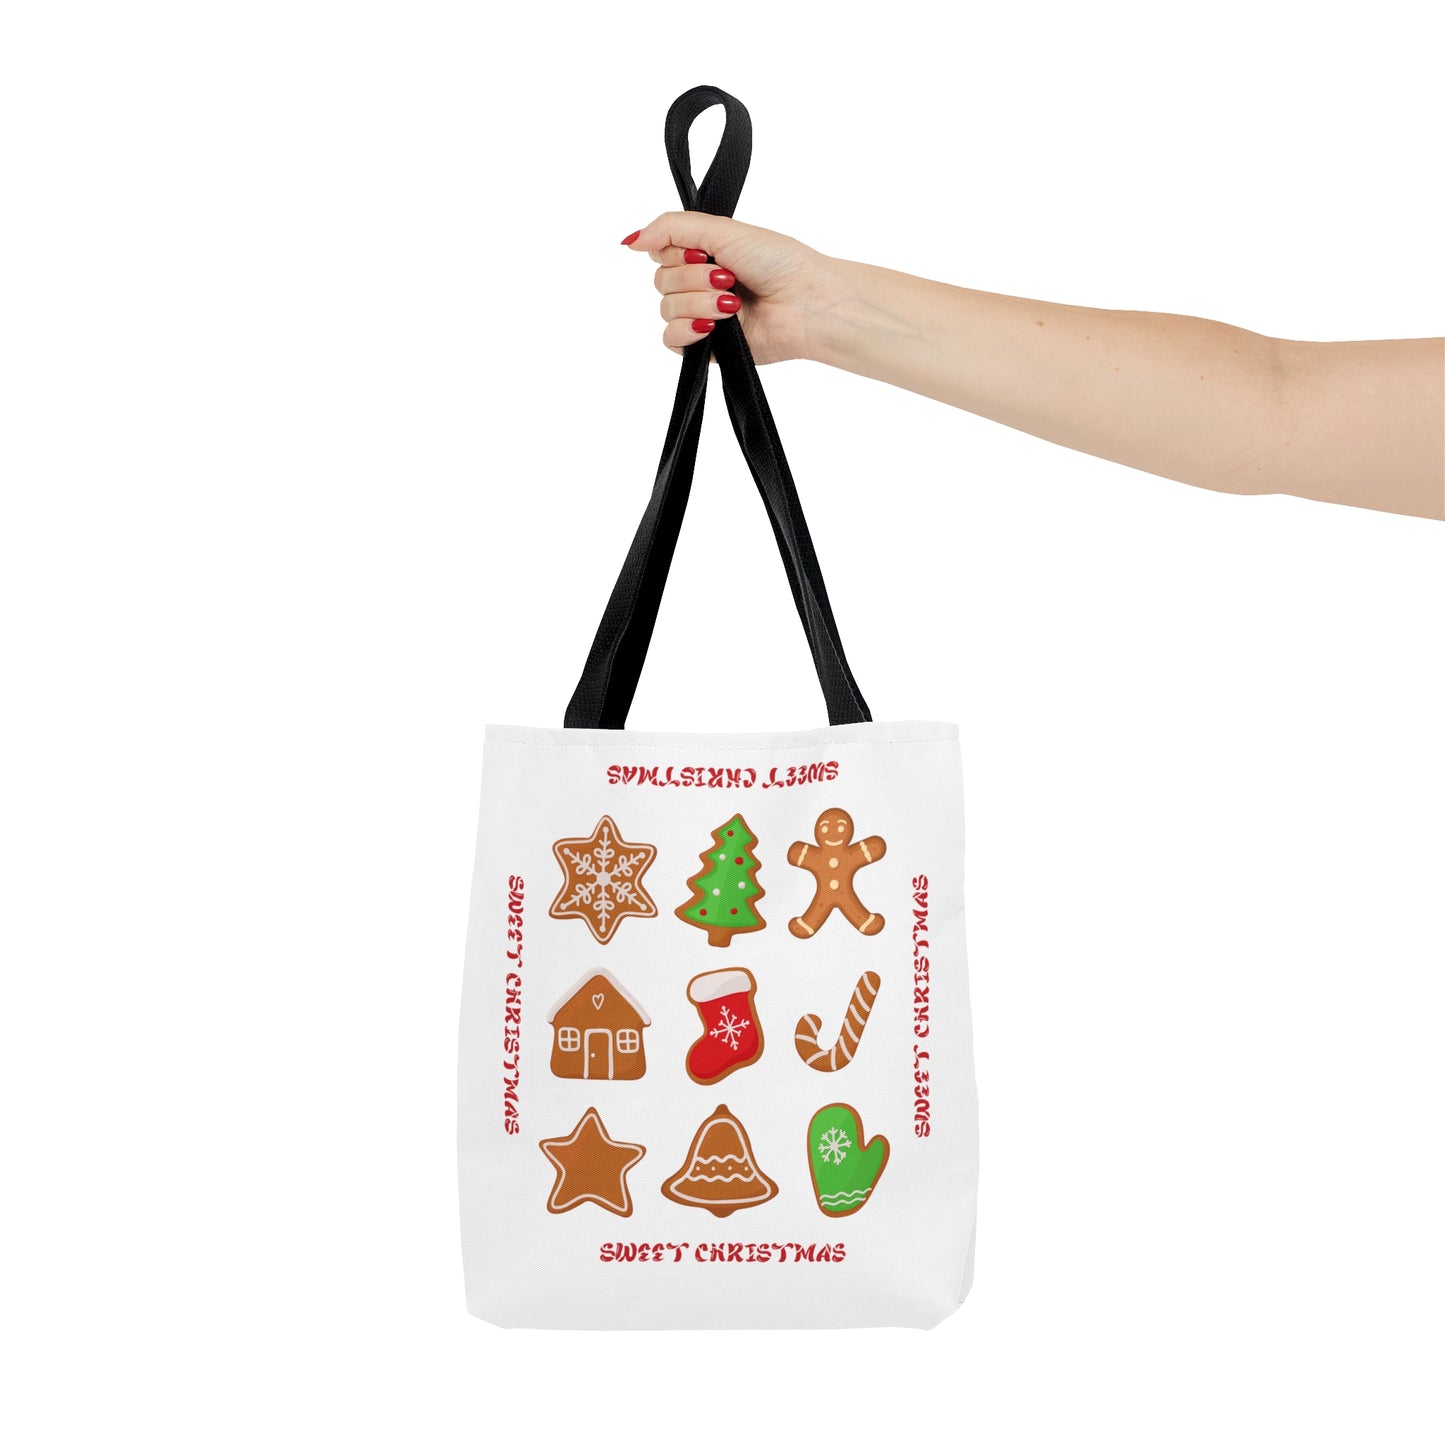 Christmas Ornaments Printed Tote Bags